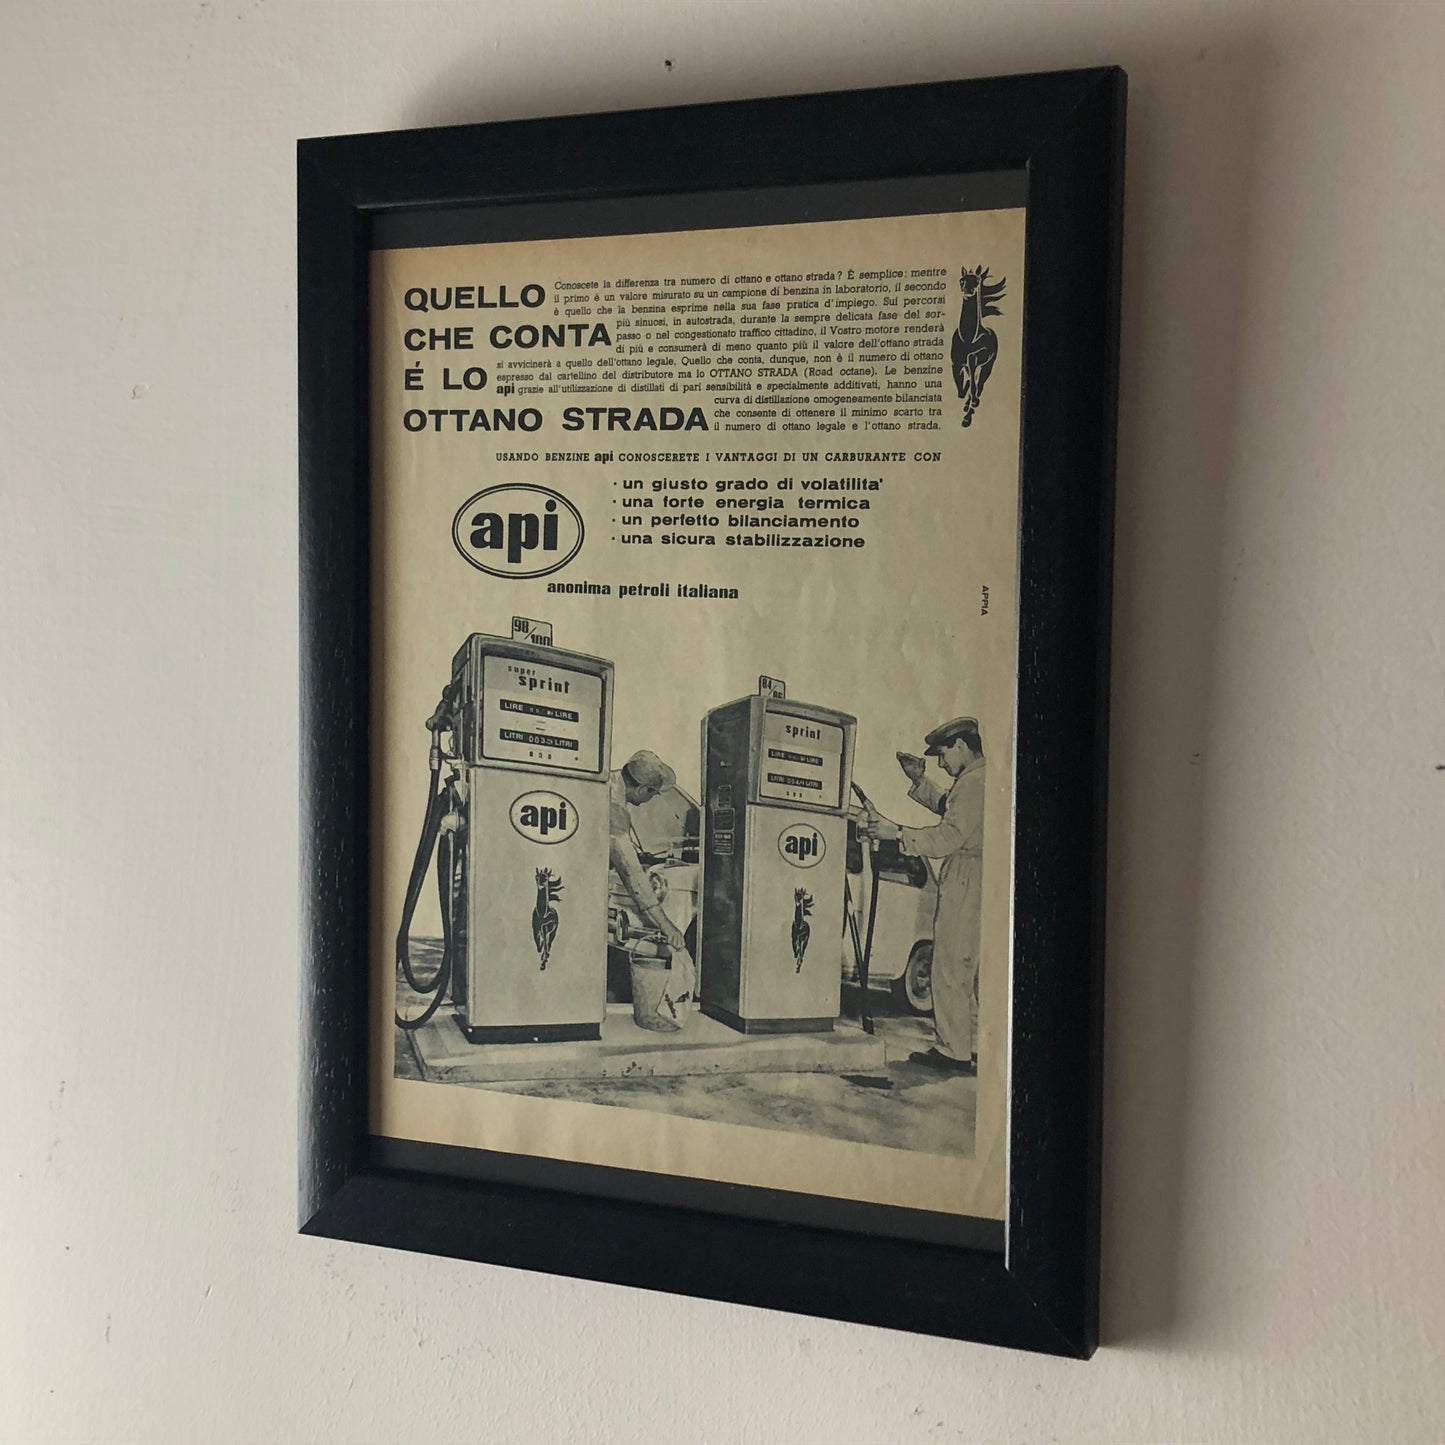 API, Advertising Year 1960 What Counts is the Ottona Strada, Benzine Anonima Petroli Italiana